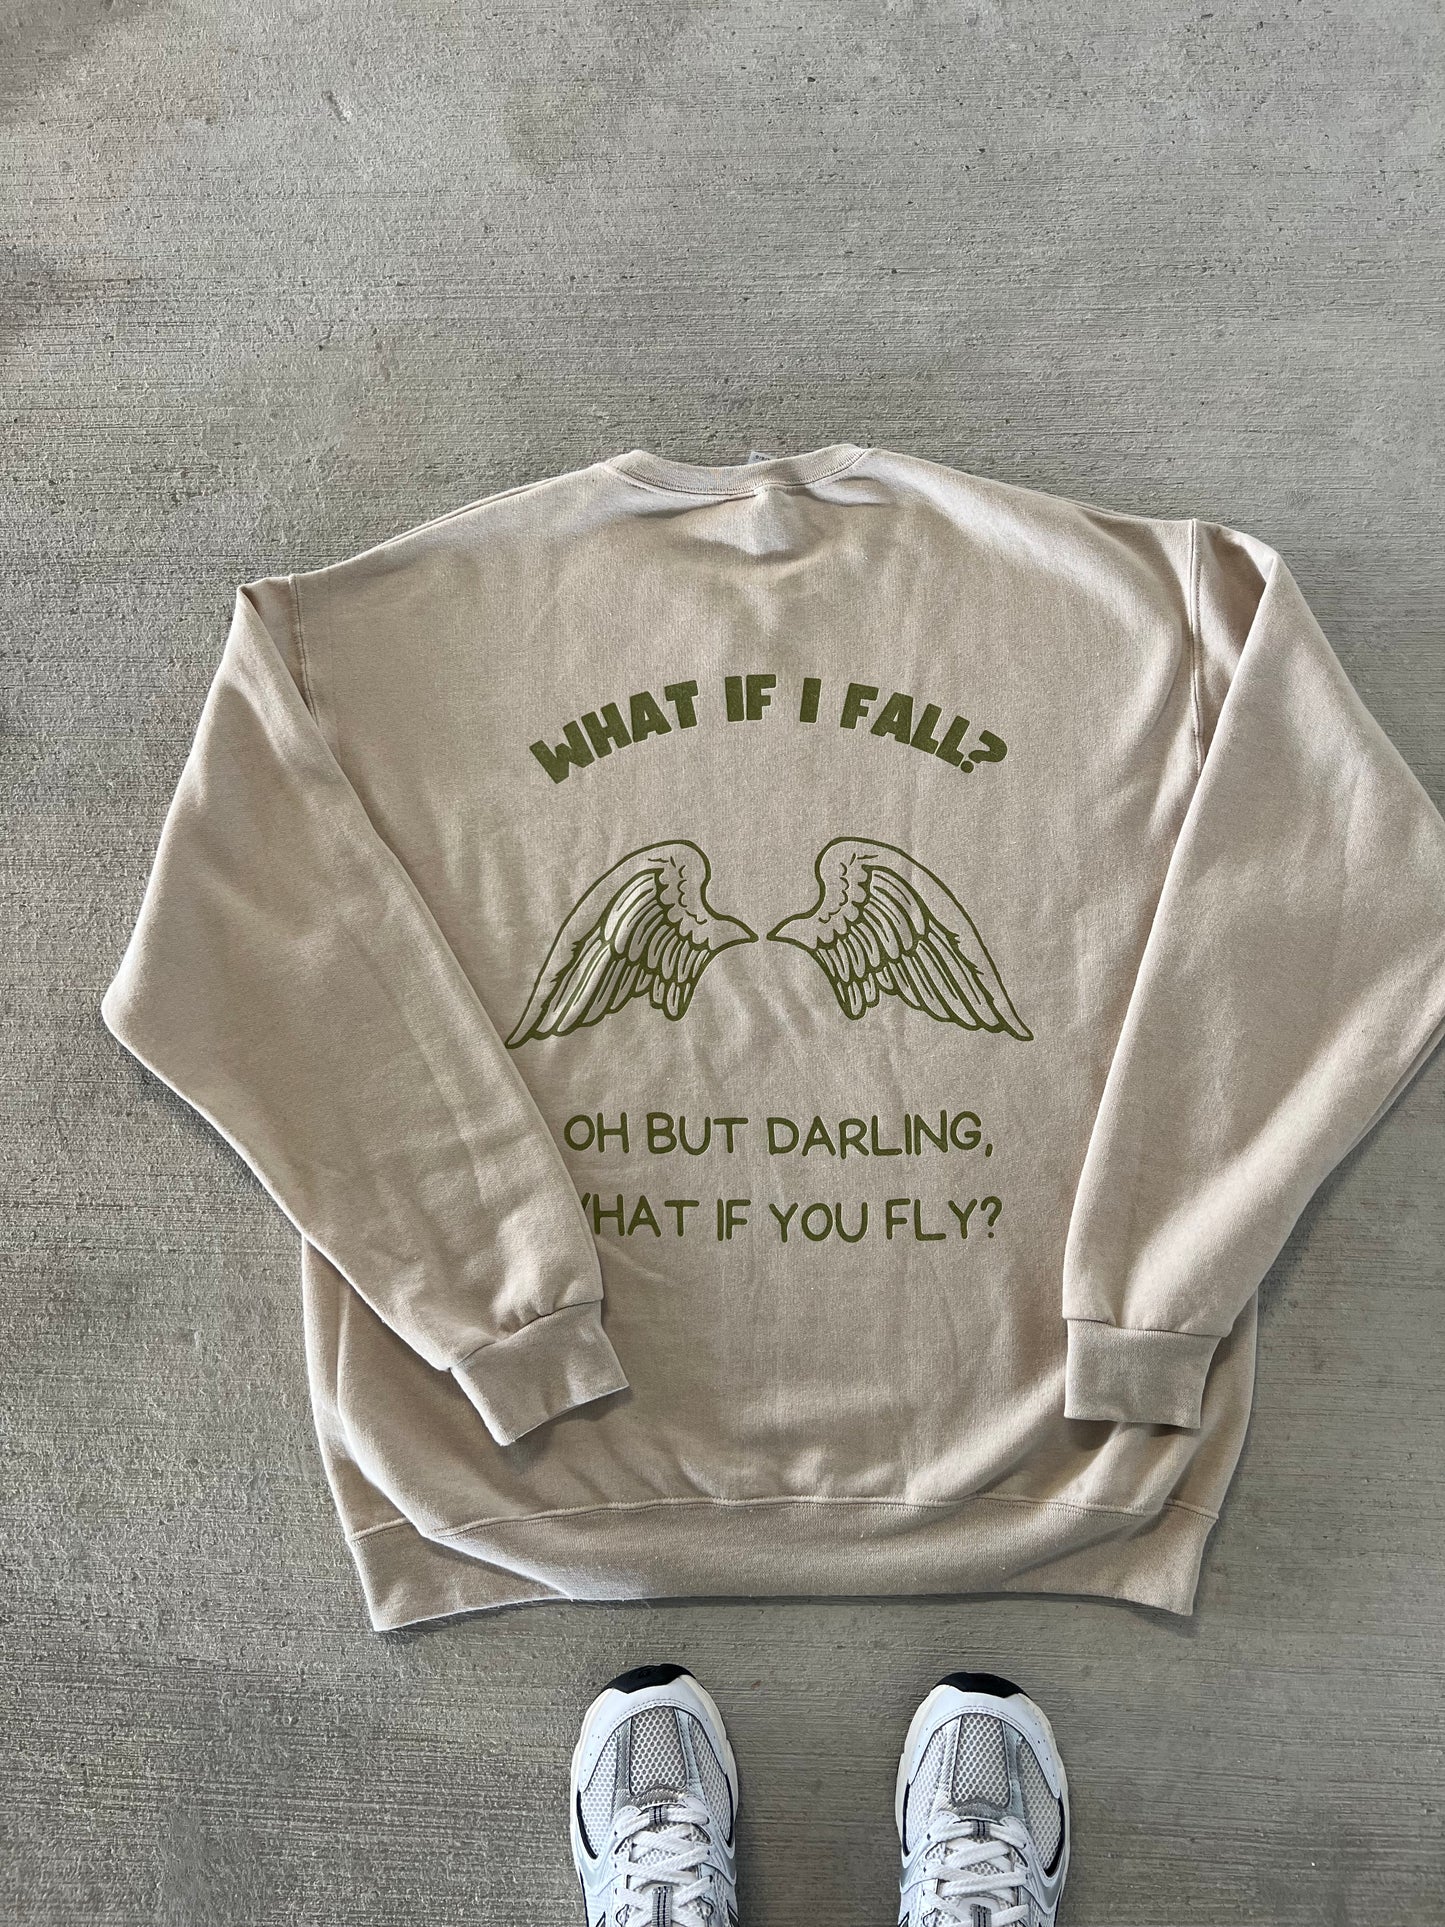 'What if you fly' Sweatshirt